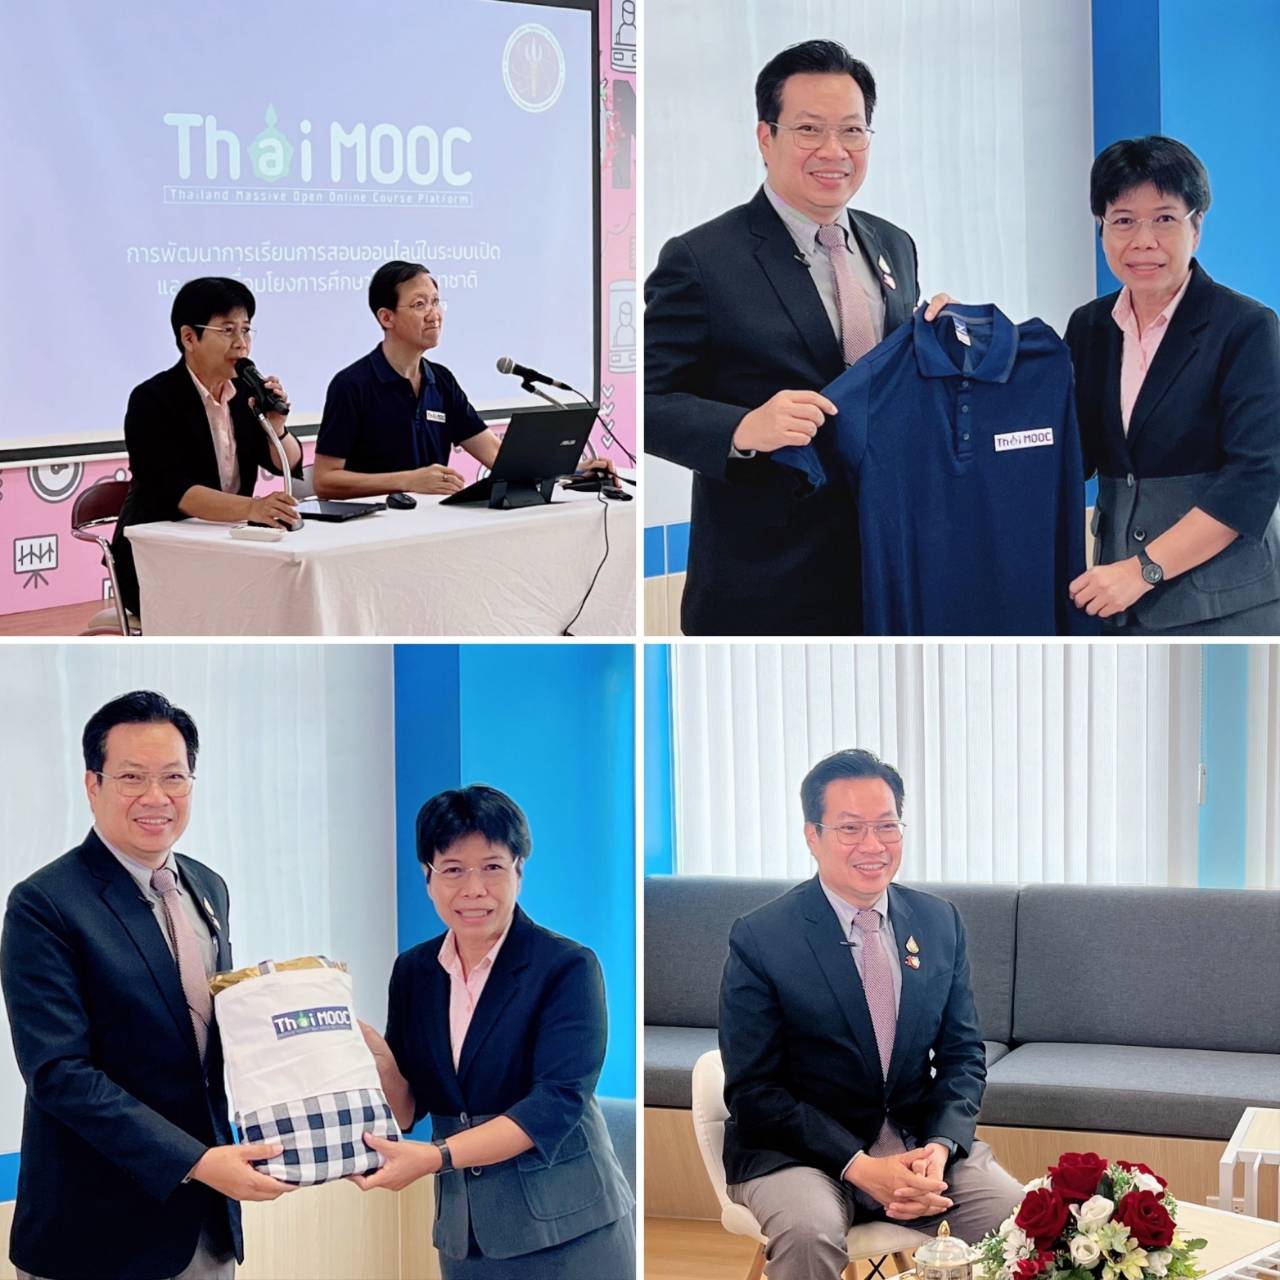 Thai  MOOC ได้เข้าร่วมโครงการอบรมเชิงปฏิบัติการ การพัฒนารายวิชาออนไลน์ MOOC ตามมาตรฐานสากล เพื่อเพิ่มคุณภาพการเรียนรู้